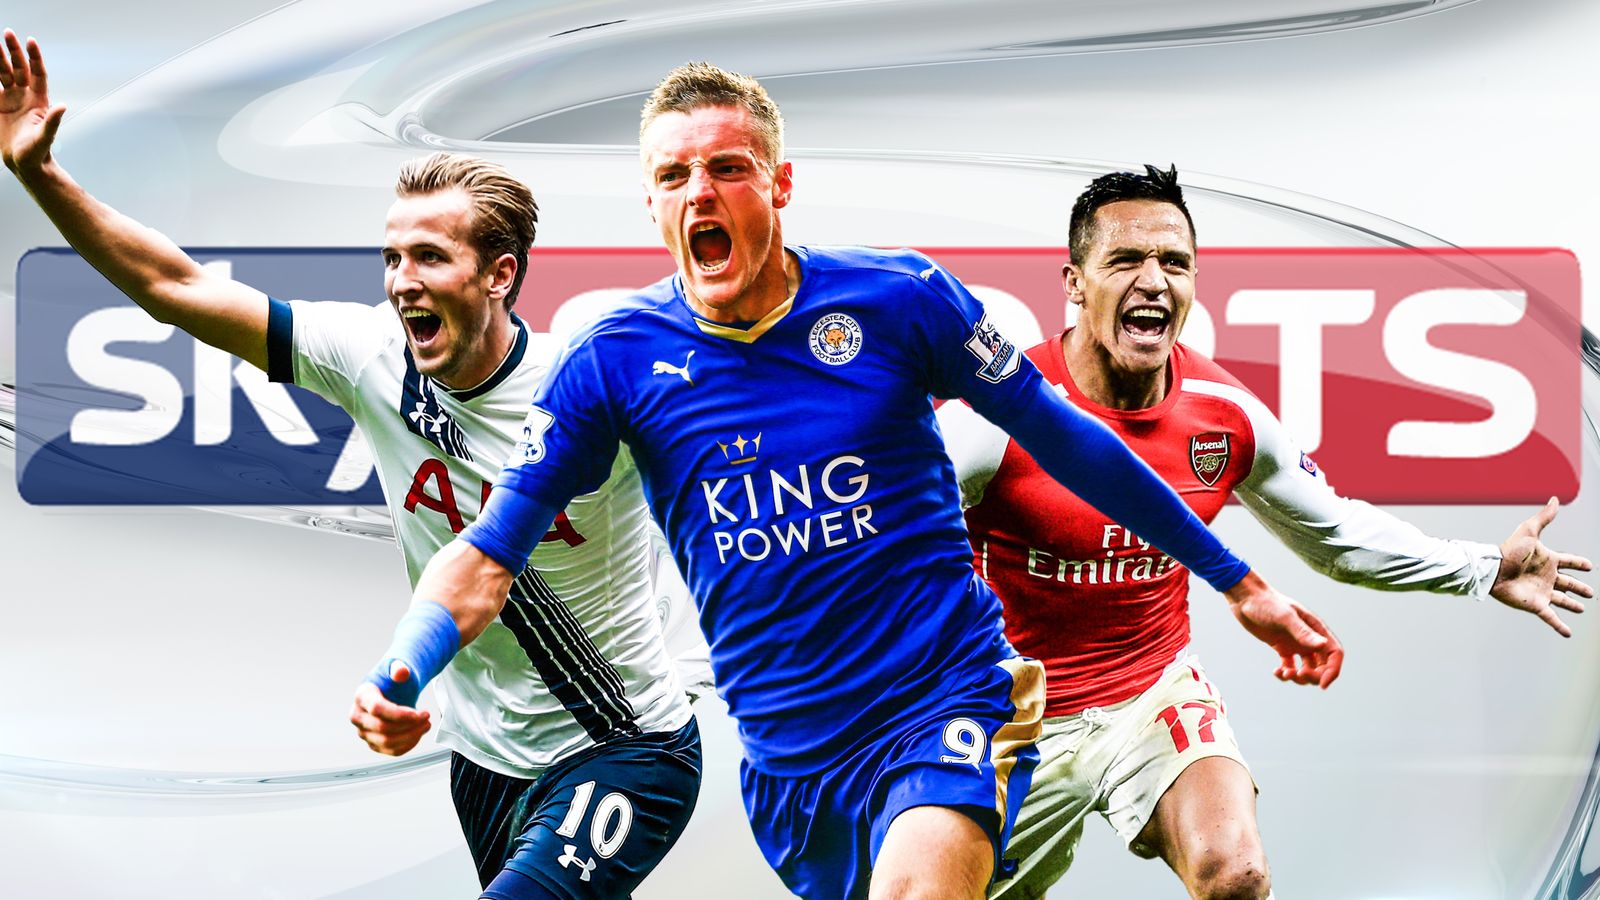 Sky Sports Premier League. Sky Sports Football. Sky Sports Football presentation.